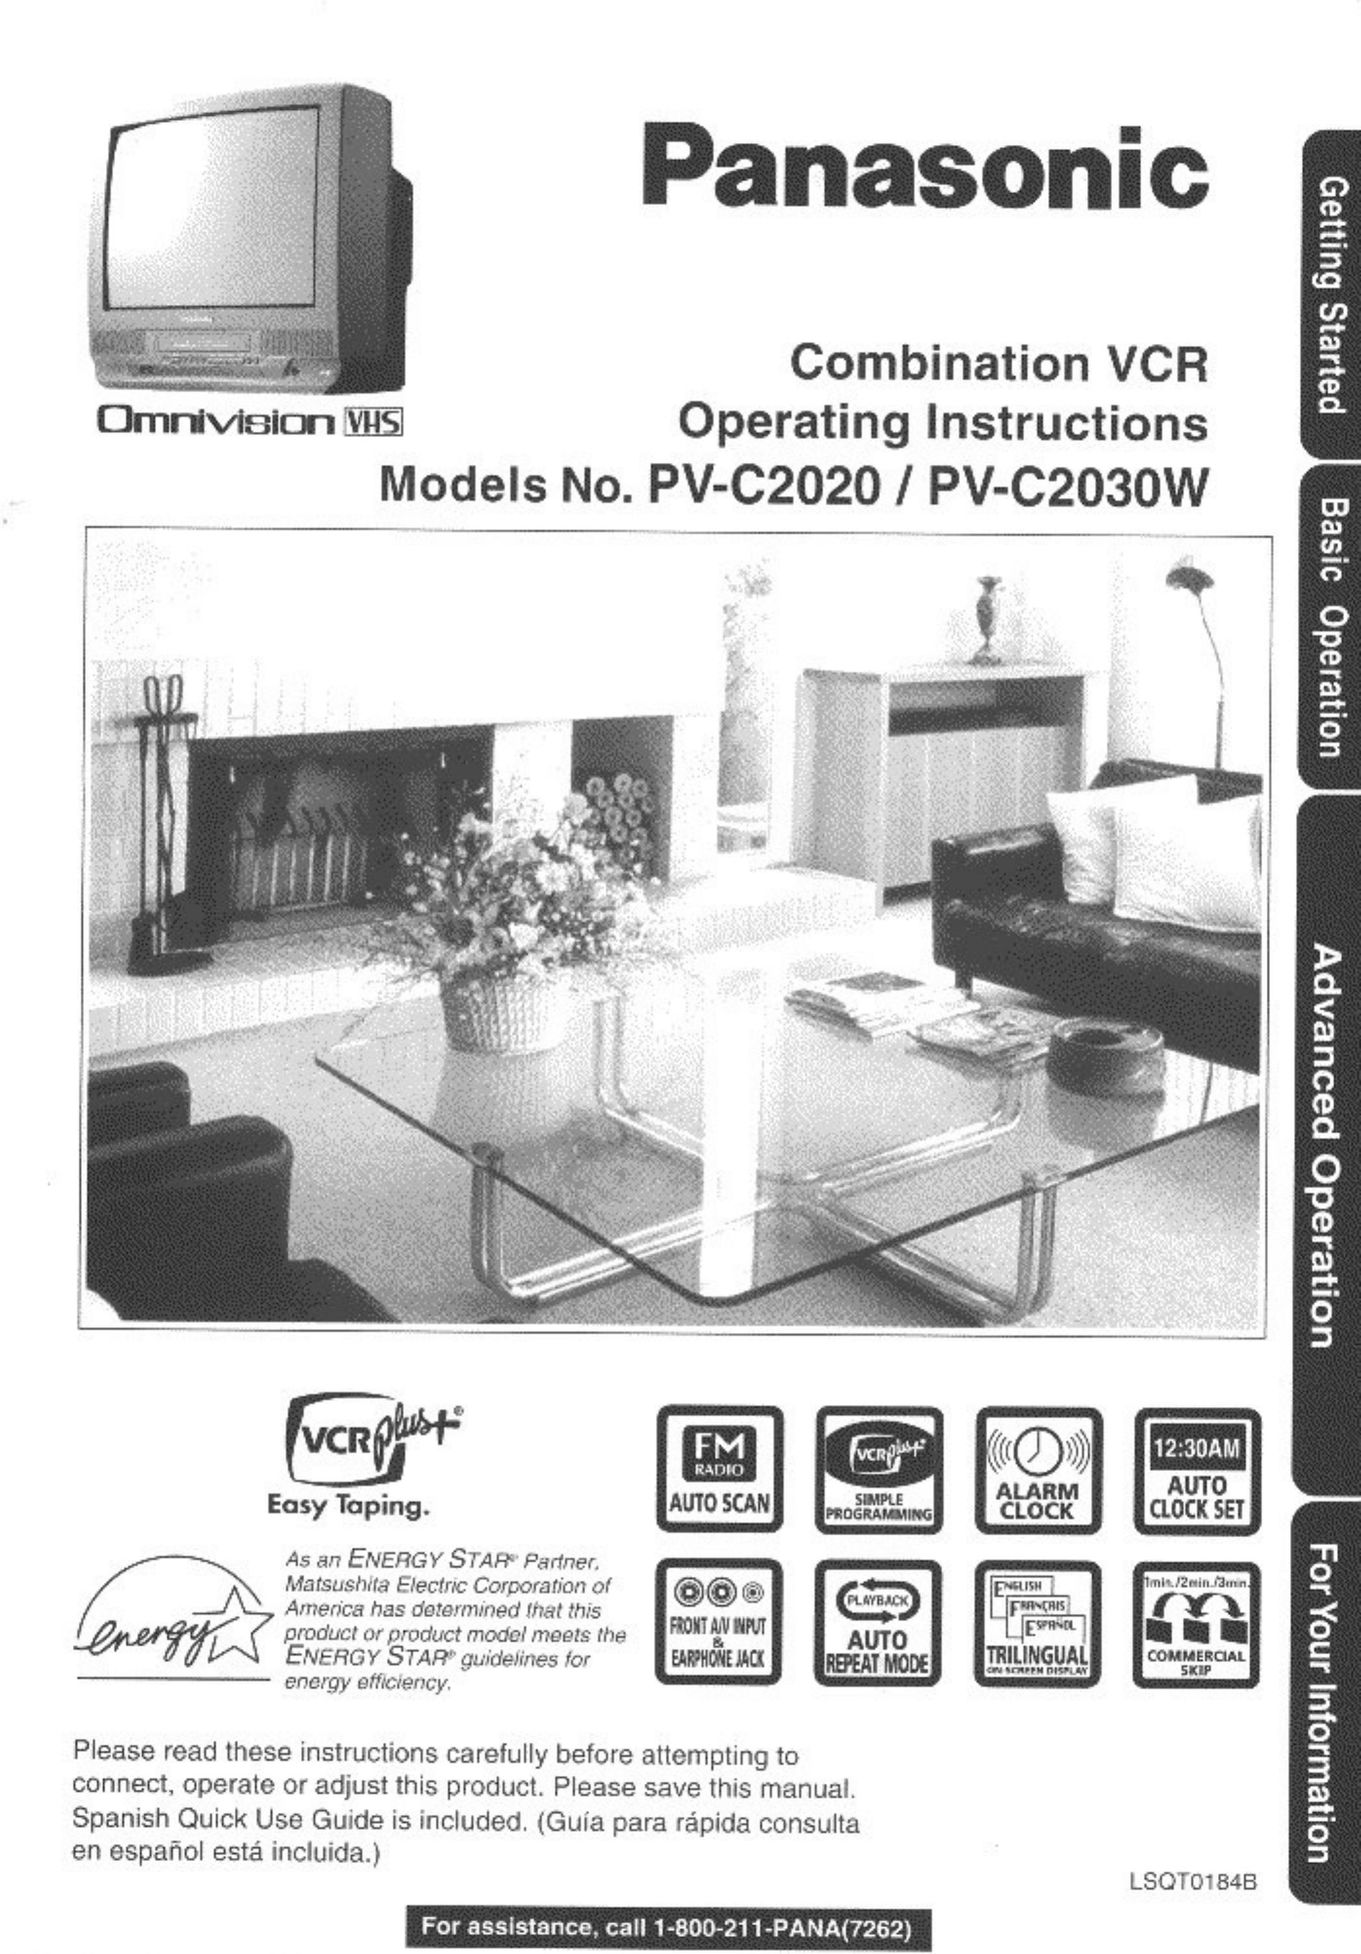 Panasonic PV C2030W TV VCR Combo User Manual